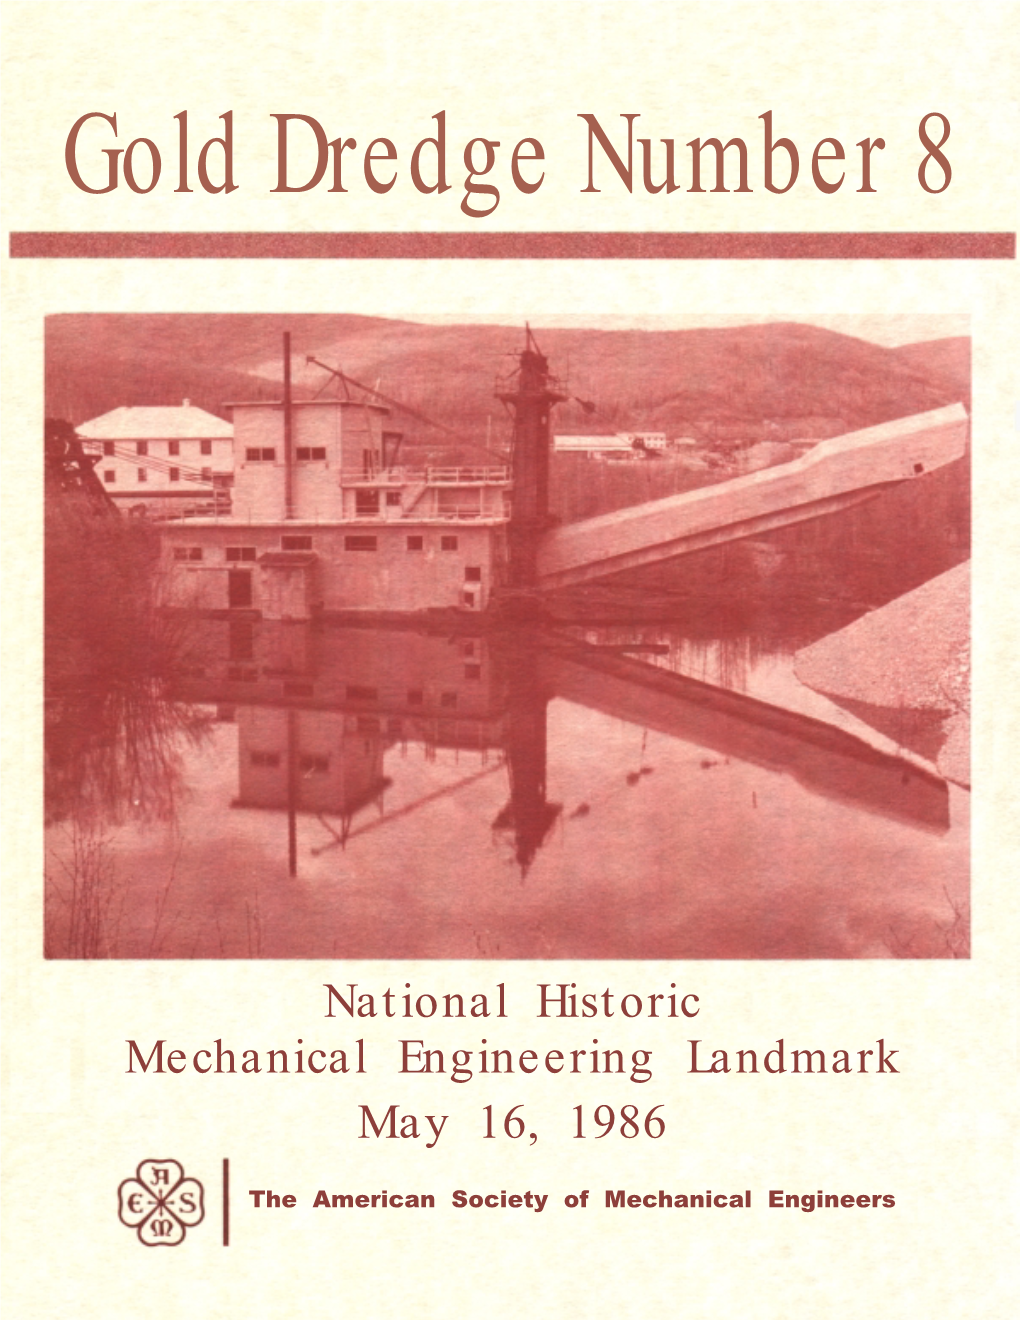 National Historic Mechanical Engineering Landmark May 16, 1986